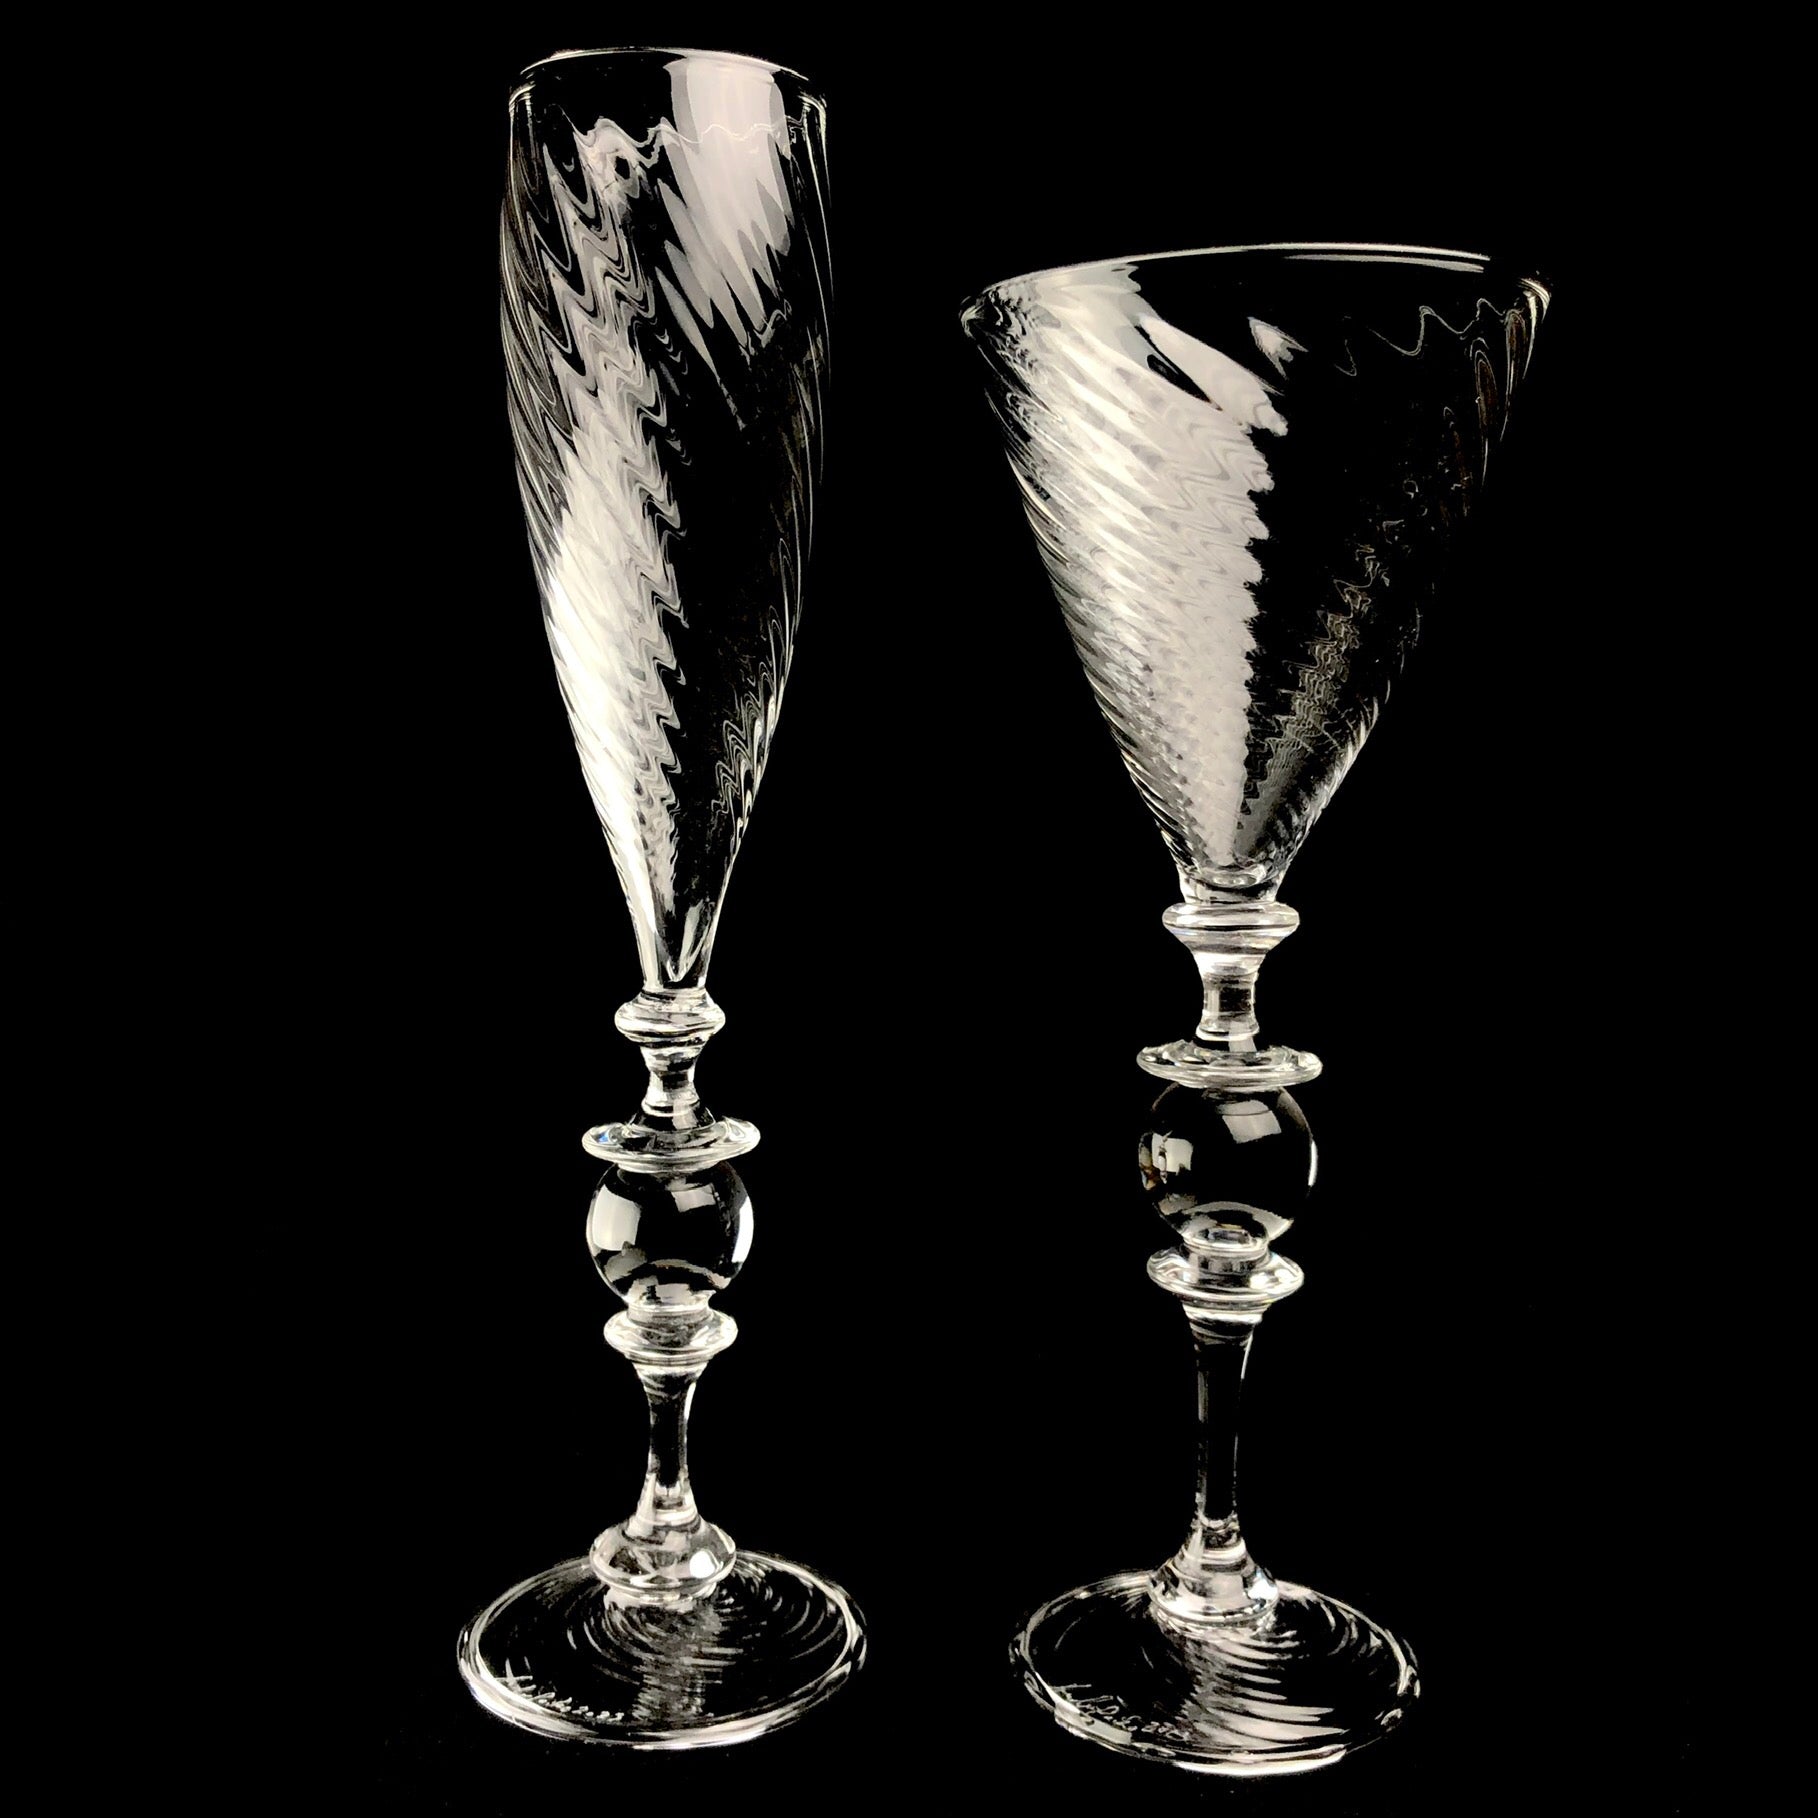 Champagne Flute shown with Martini Glass